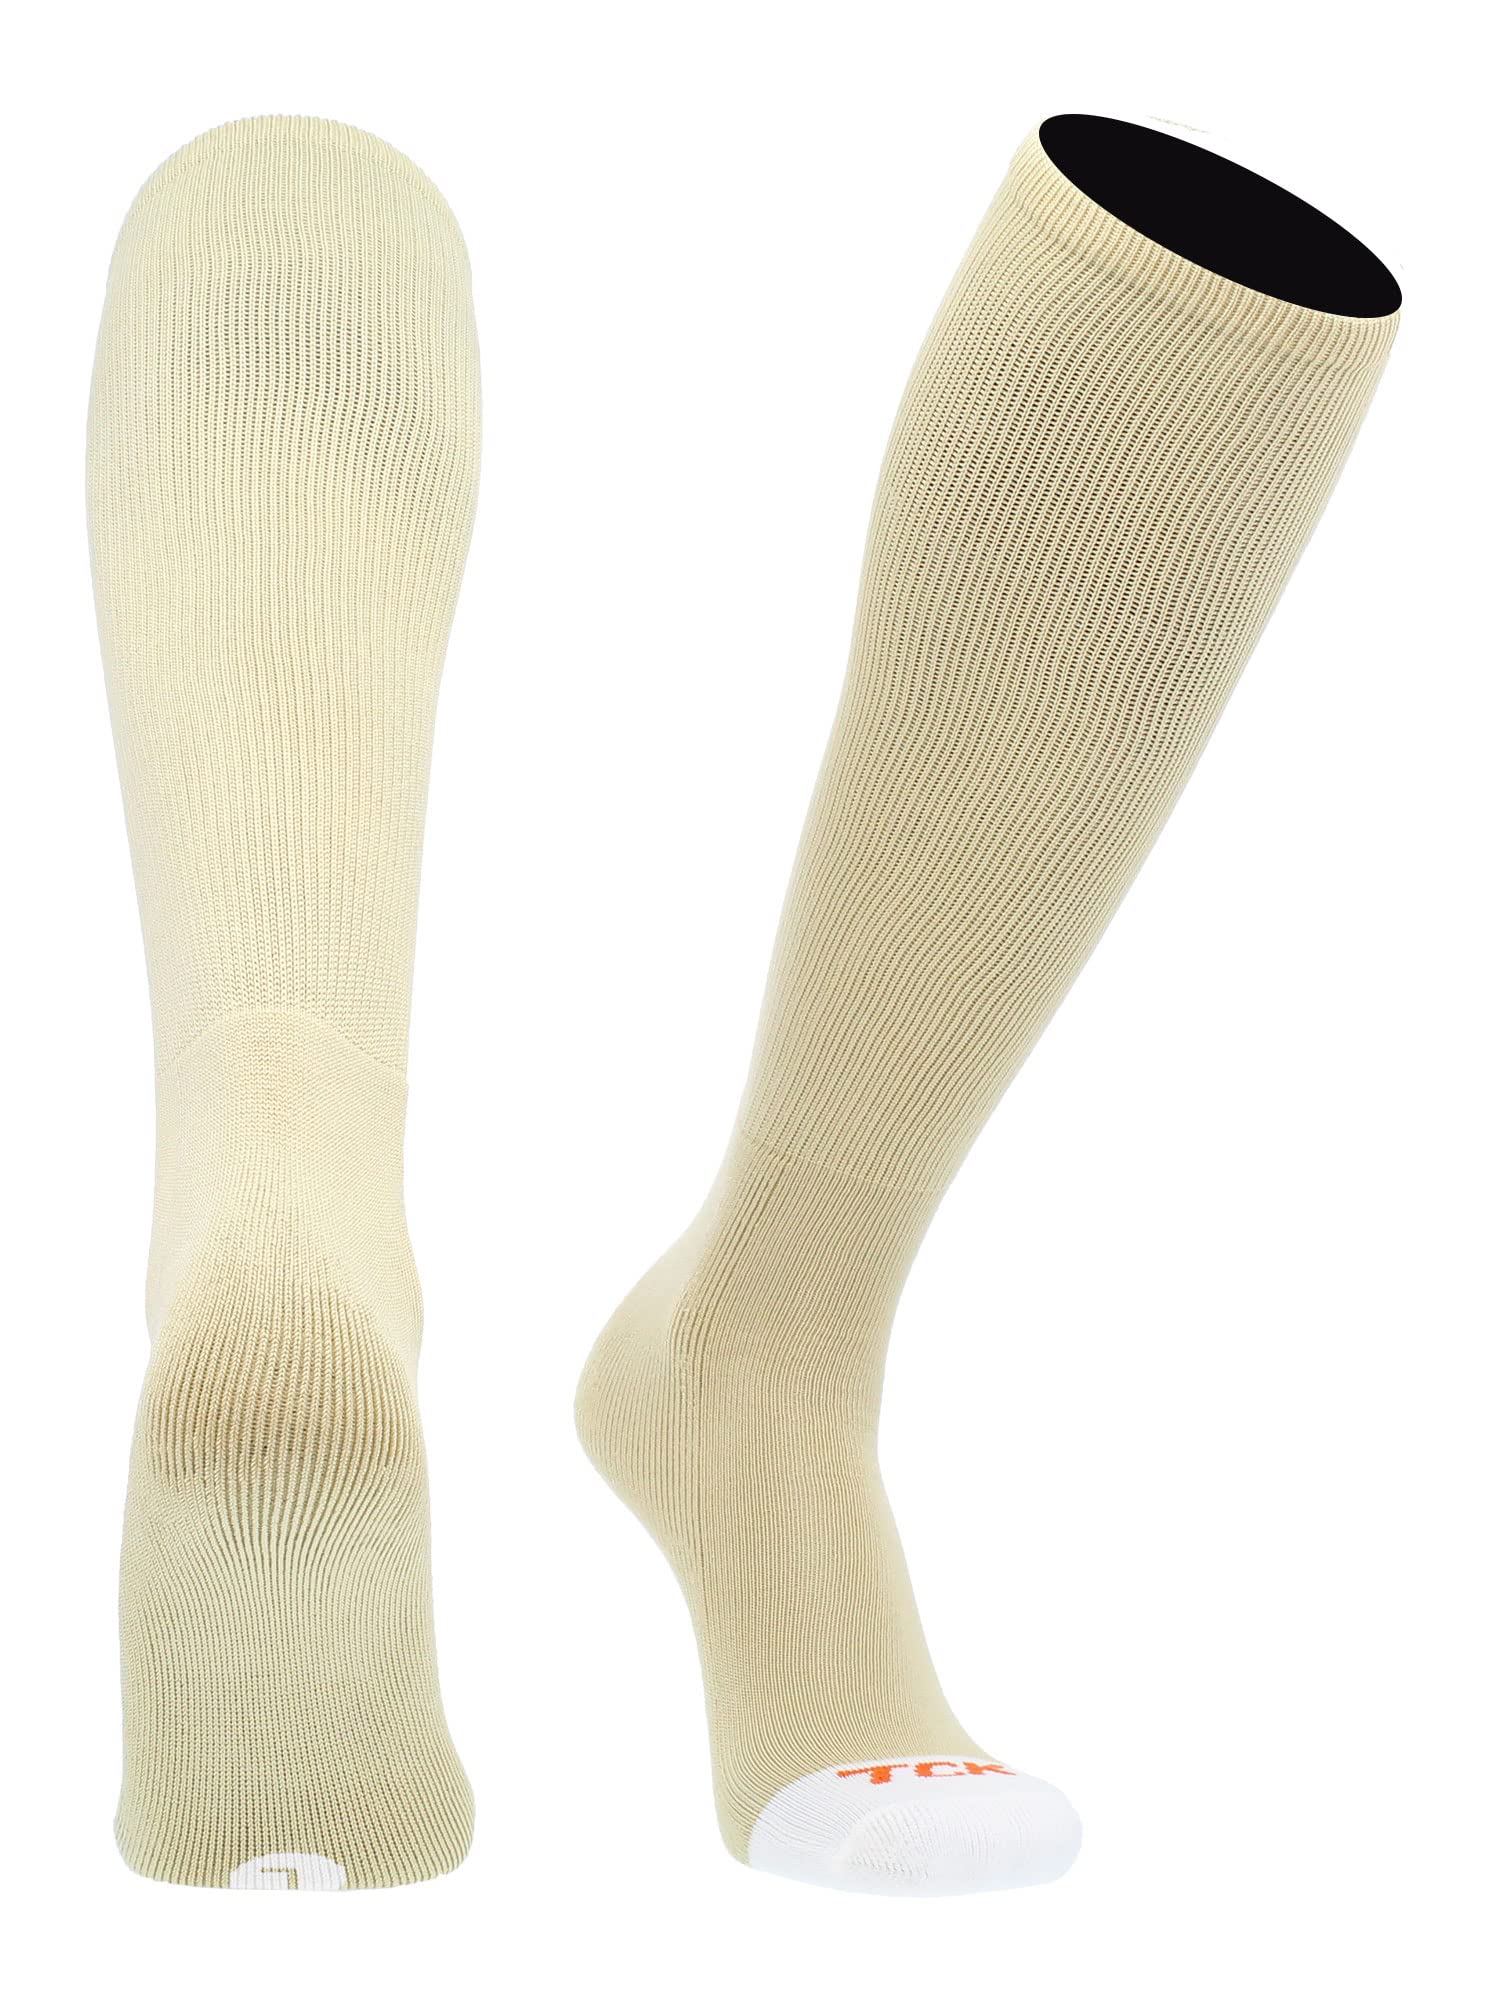 MadSportsStuff Baseball Socks - for Boys or Men Girls or Women - Softball Football - Youth and Adult sizes